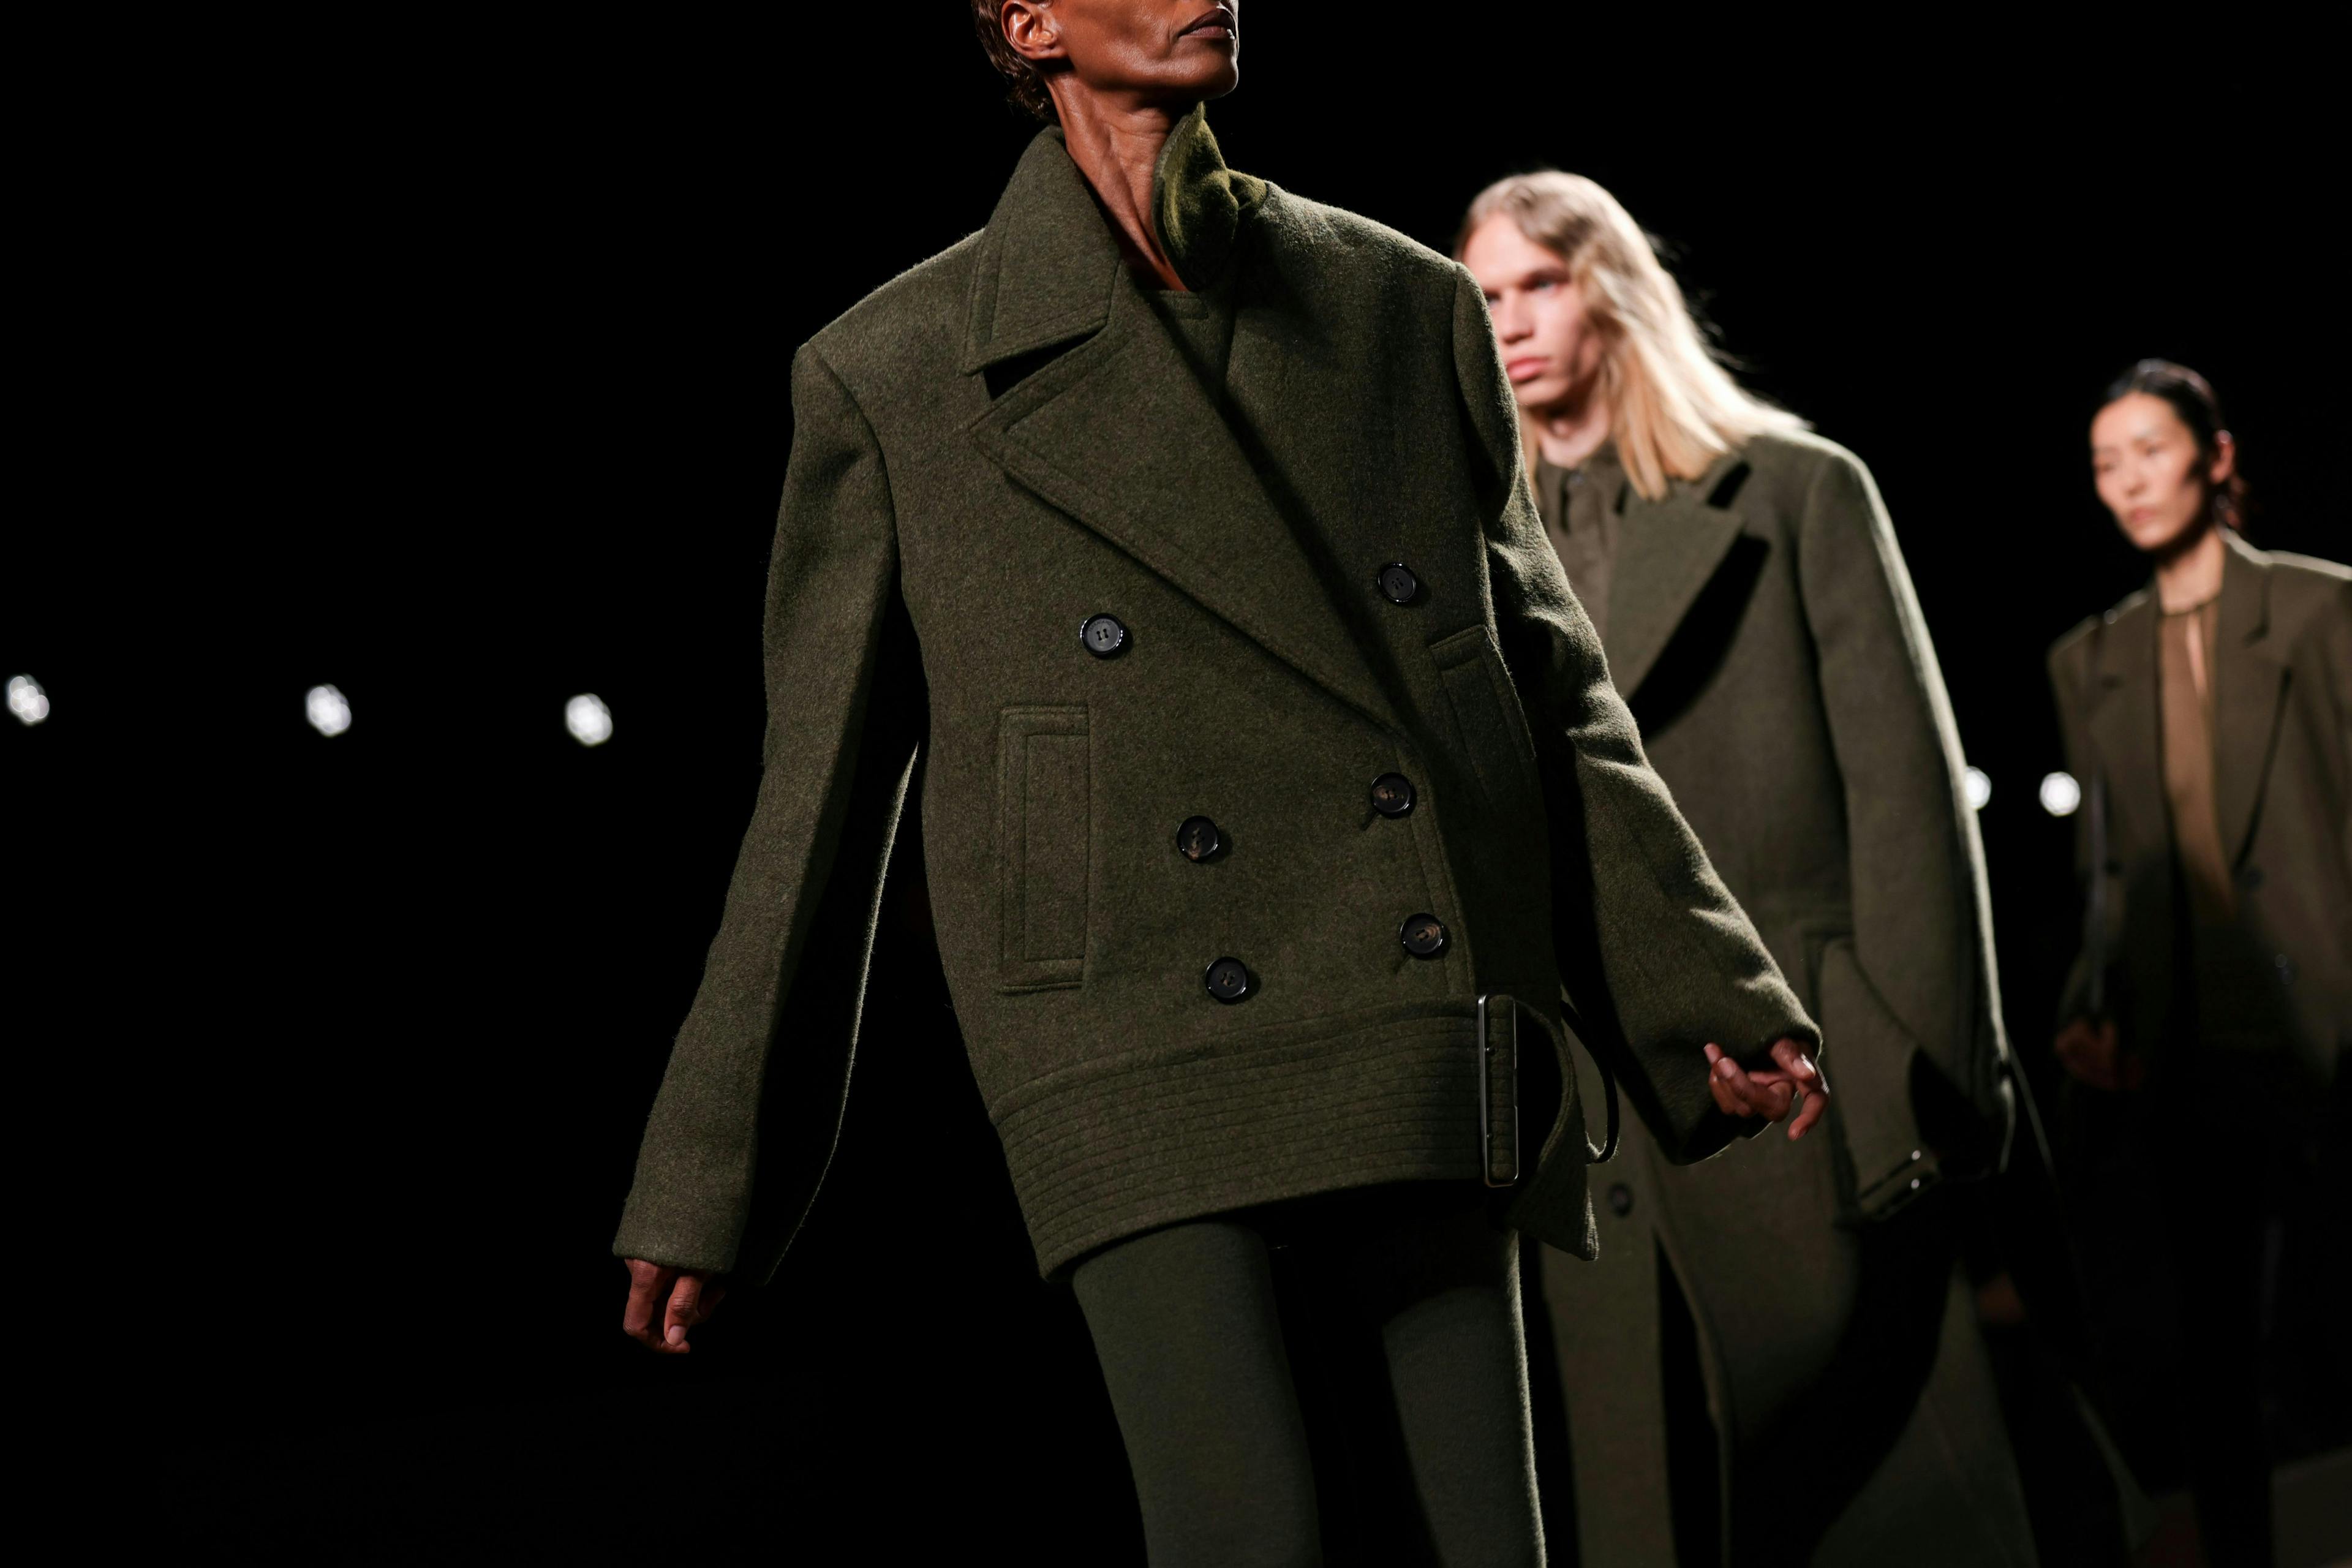 milan coat long sleeve overcoat jacket adult female person woman male man